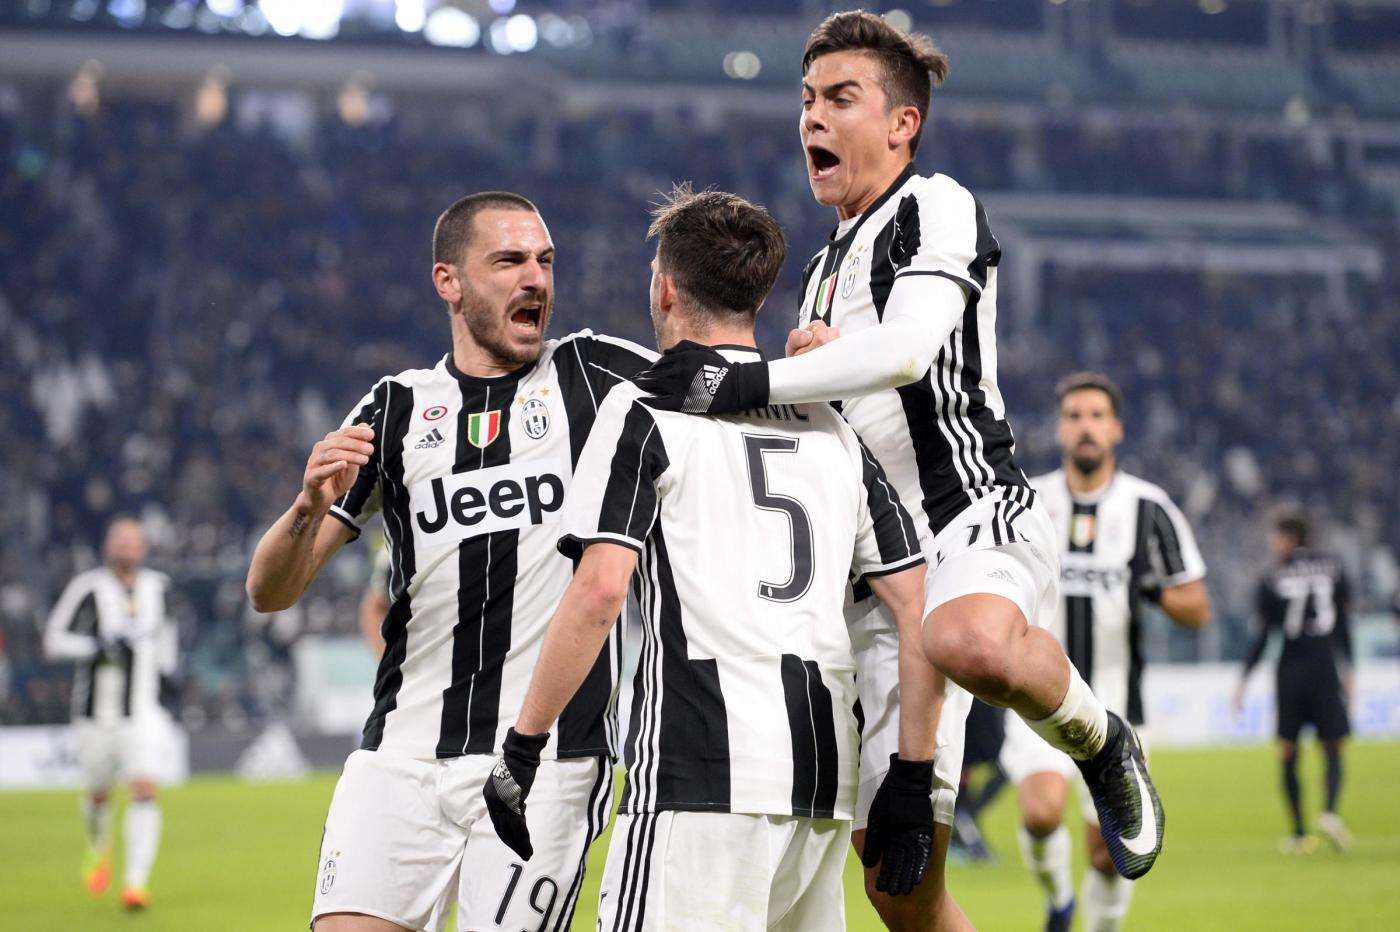 La Juventus resuscita, batte la Lazio 2-0 e vince la Coppa Italia